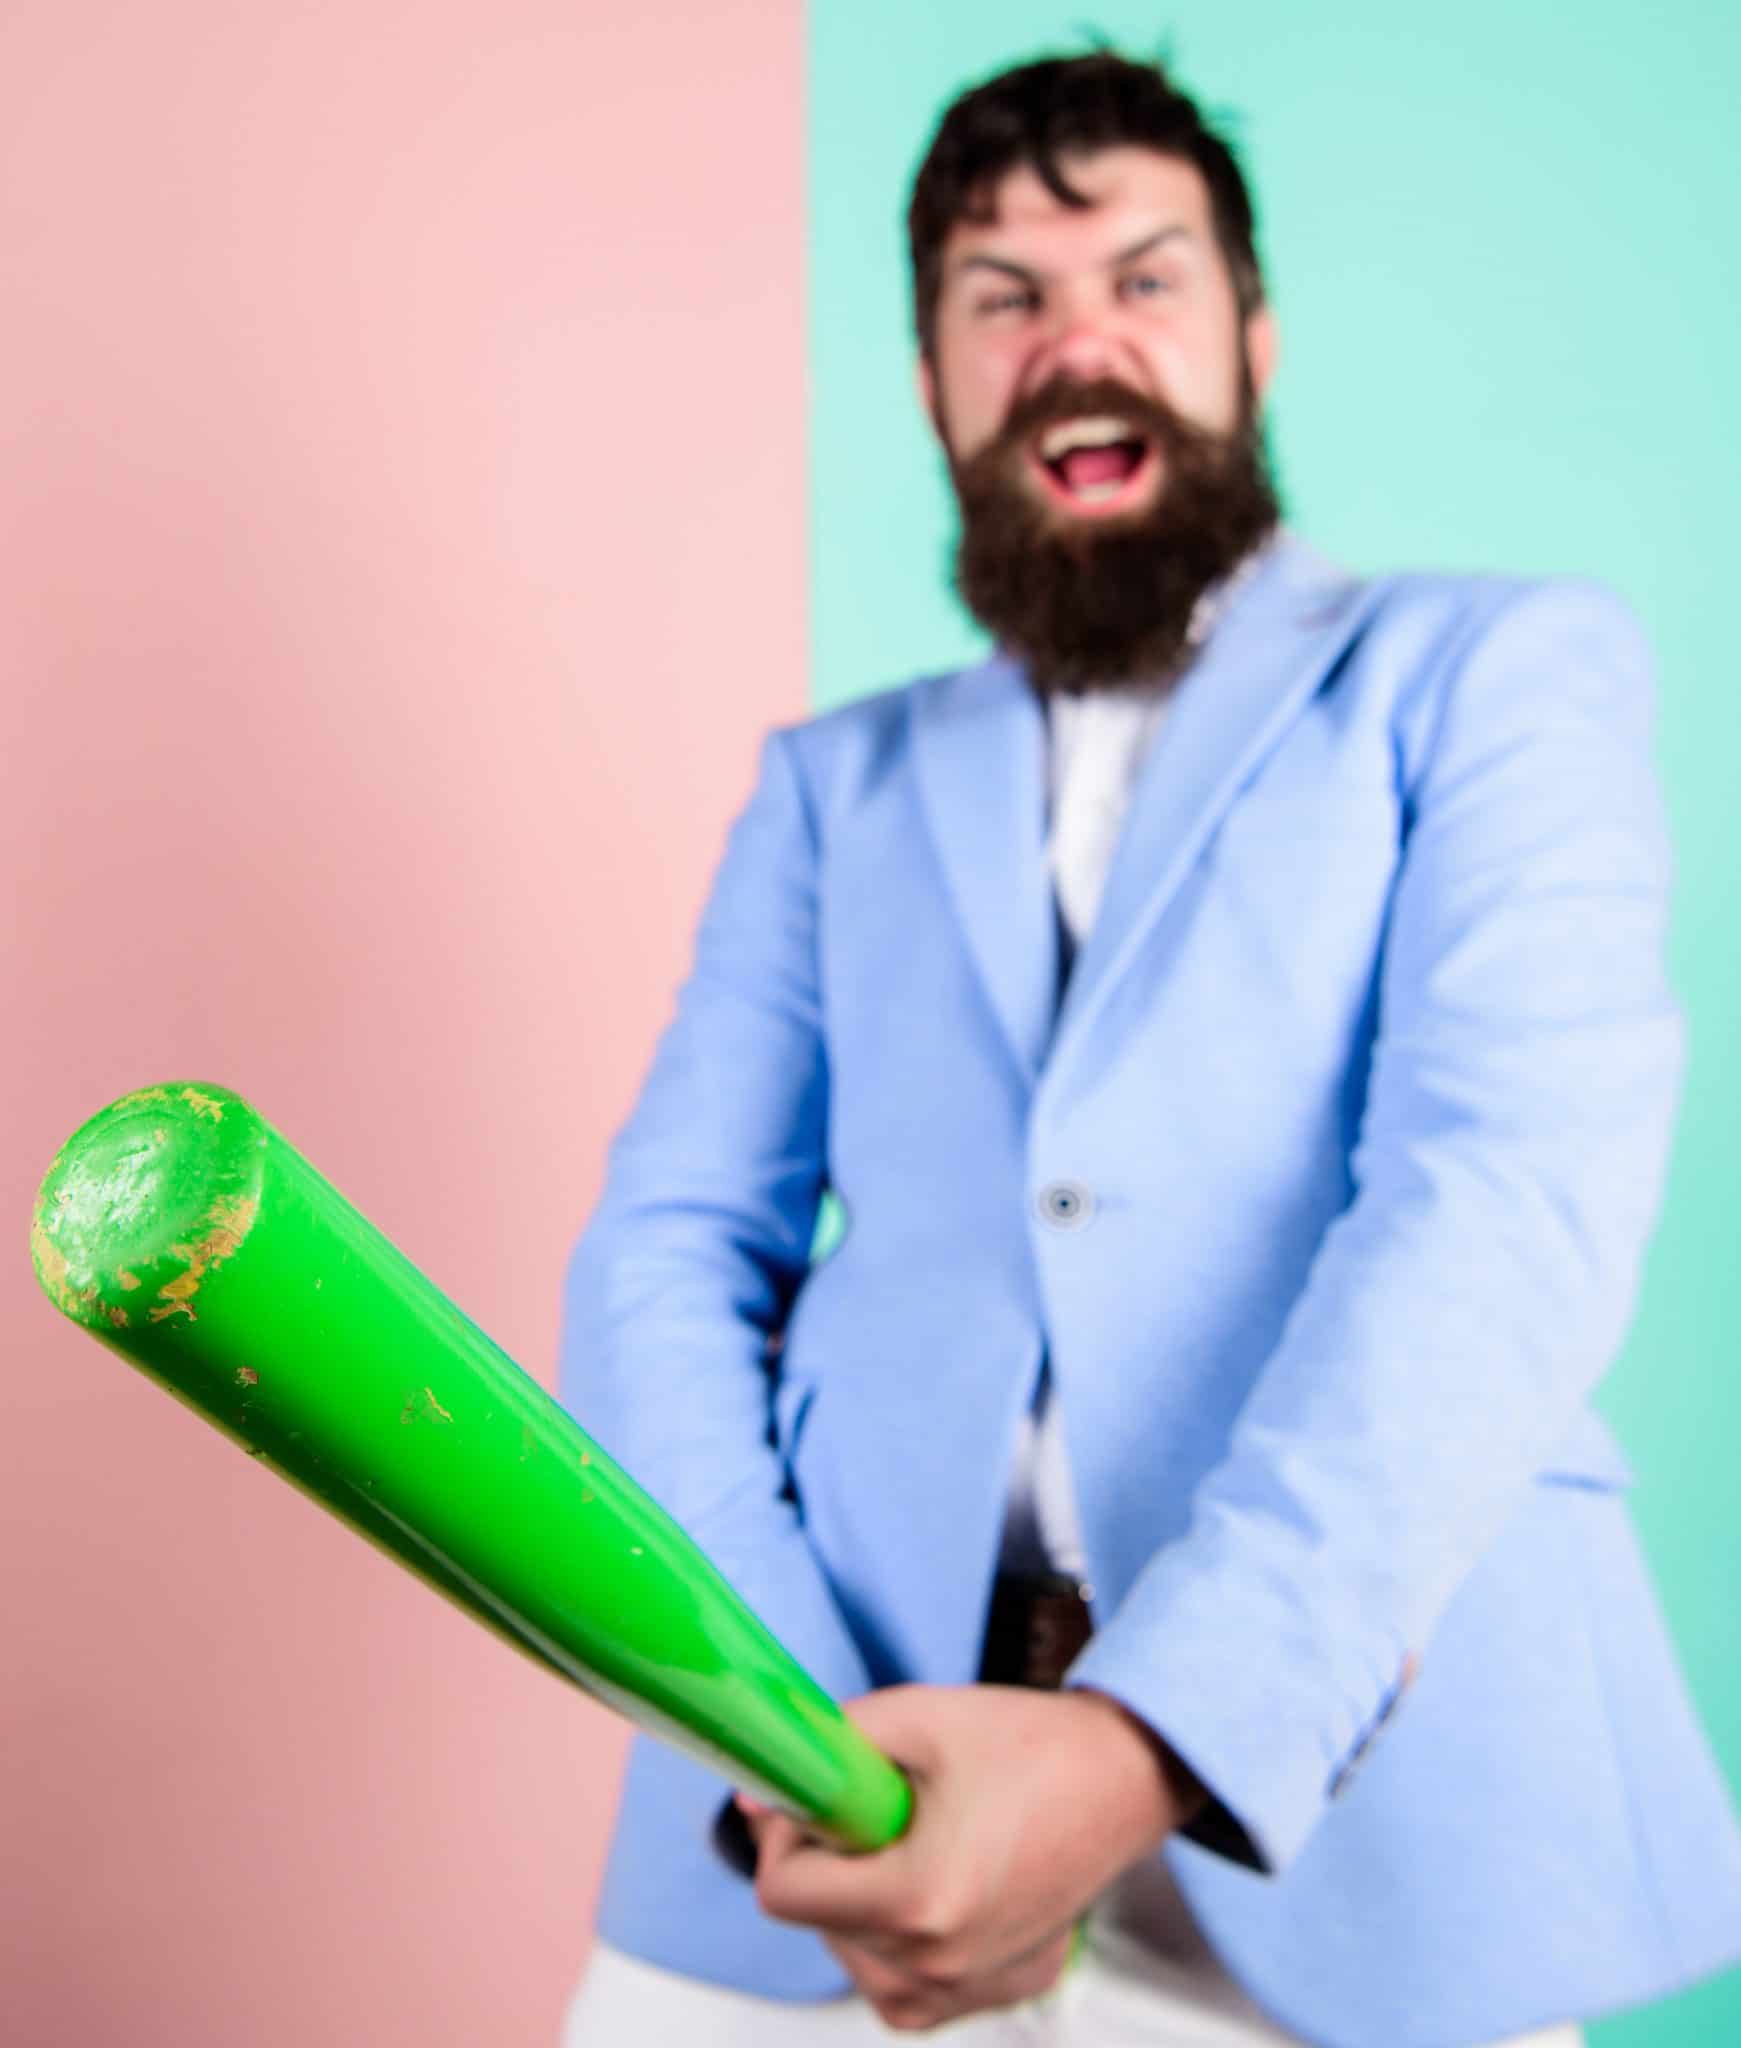 Man holding baseball bat